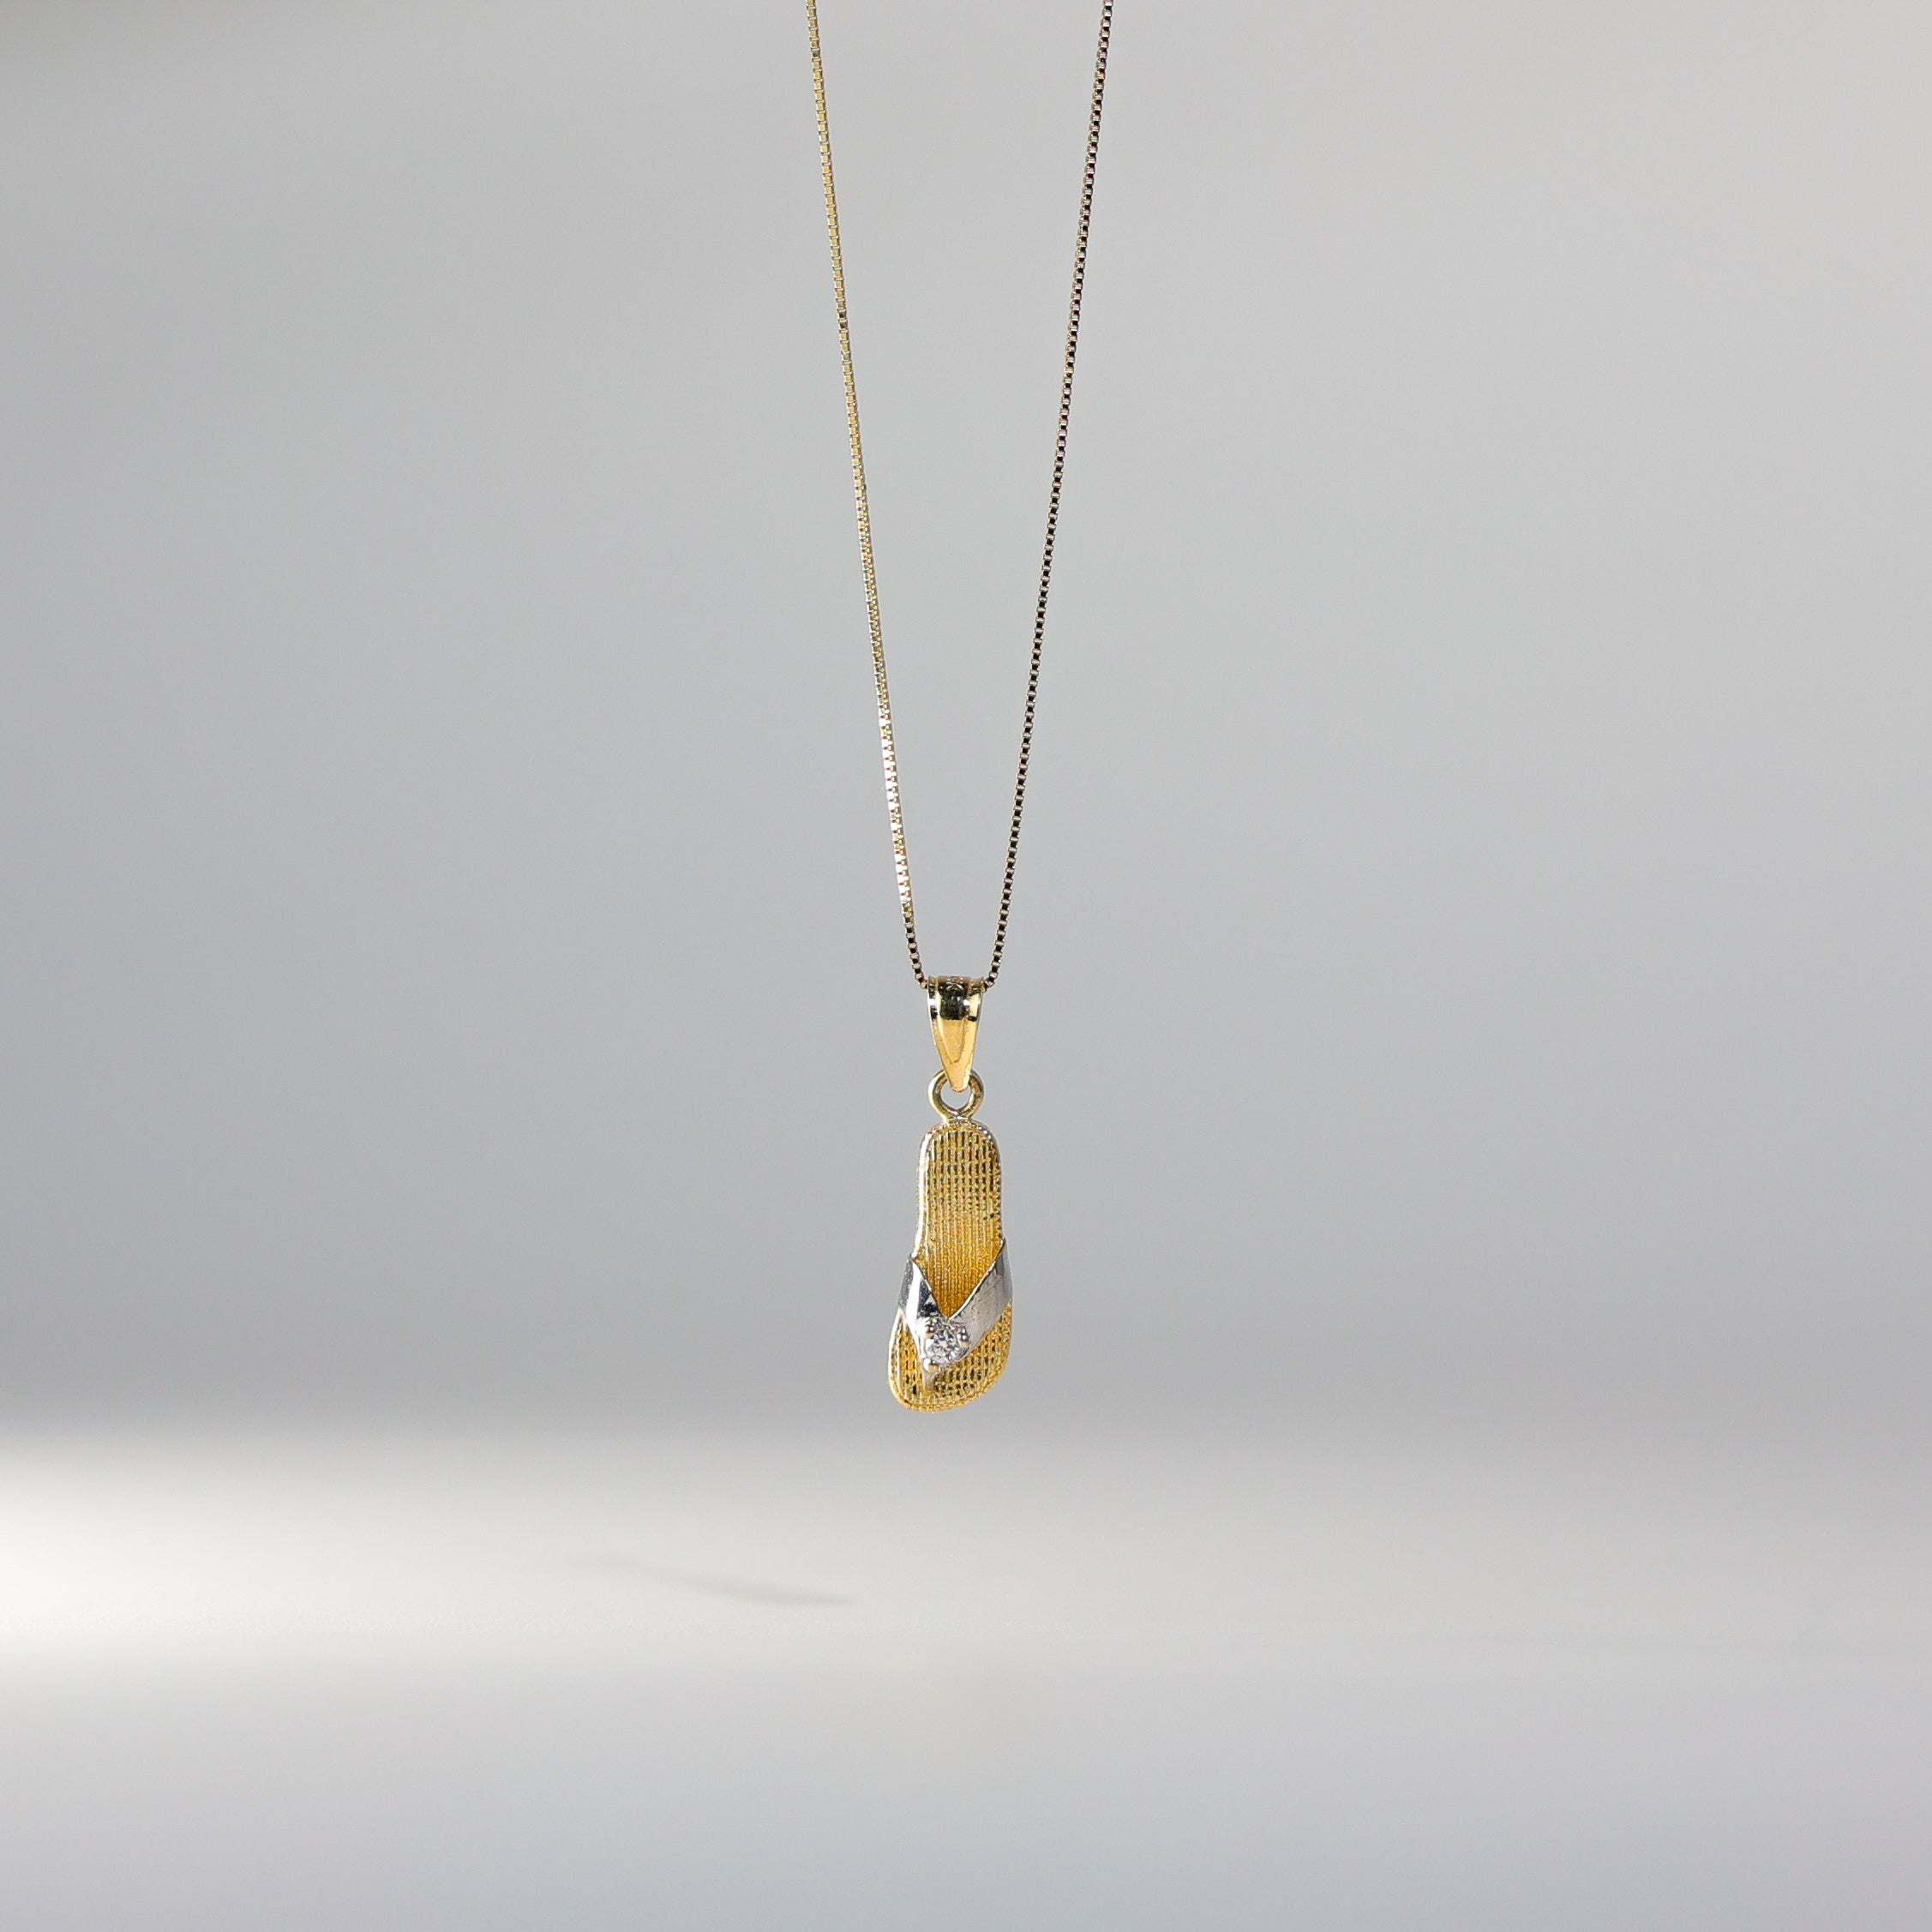 Gold Beach Sandal Pendant Model-1702 - Charlie & Co. Jewelry